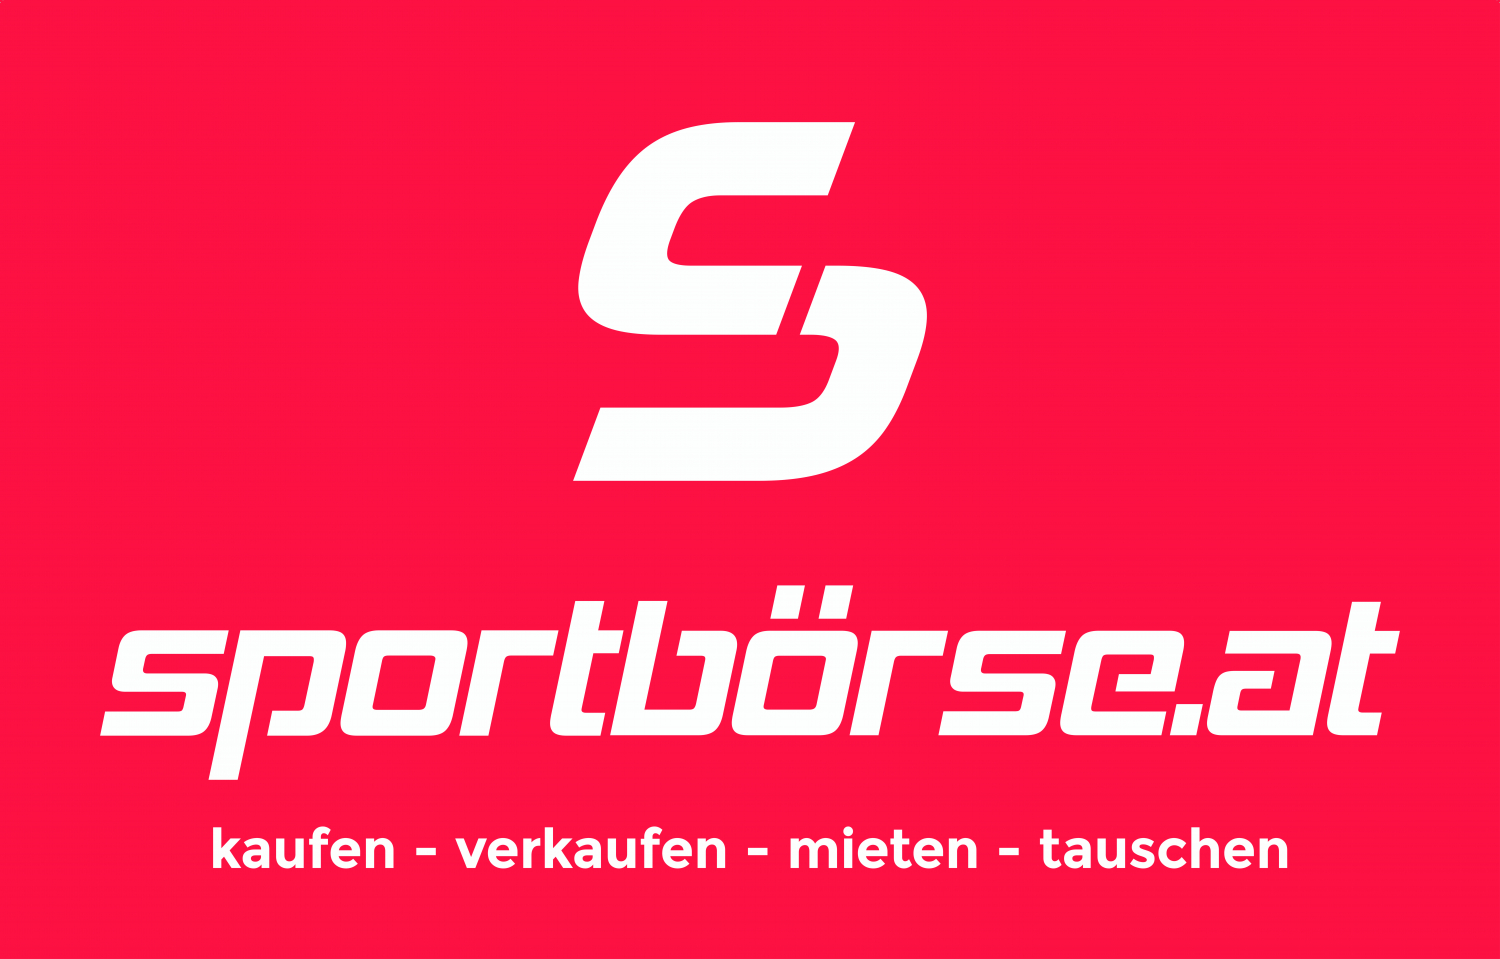 (c) Sportbörse.at / Fit4more Institut